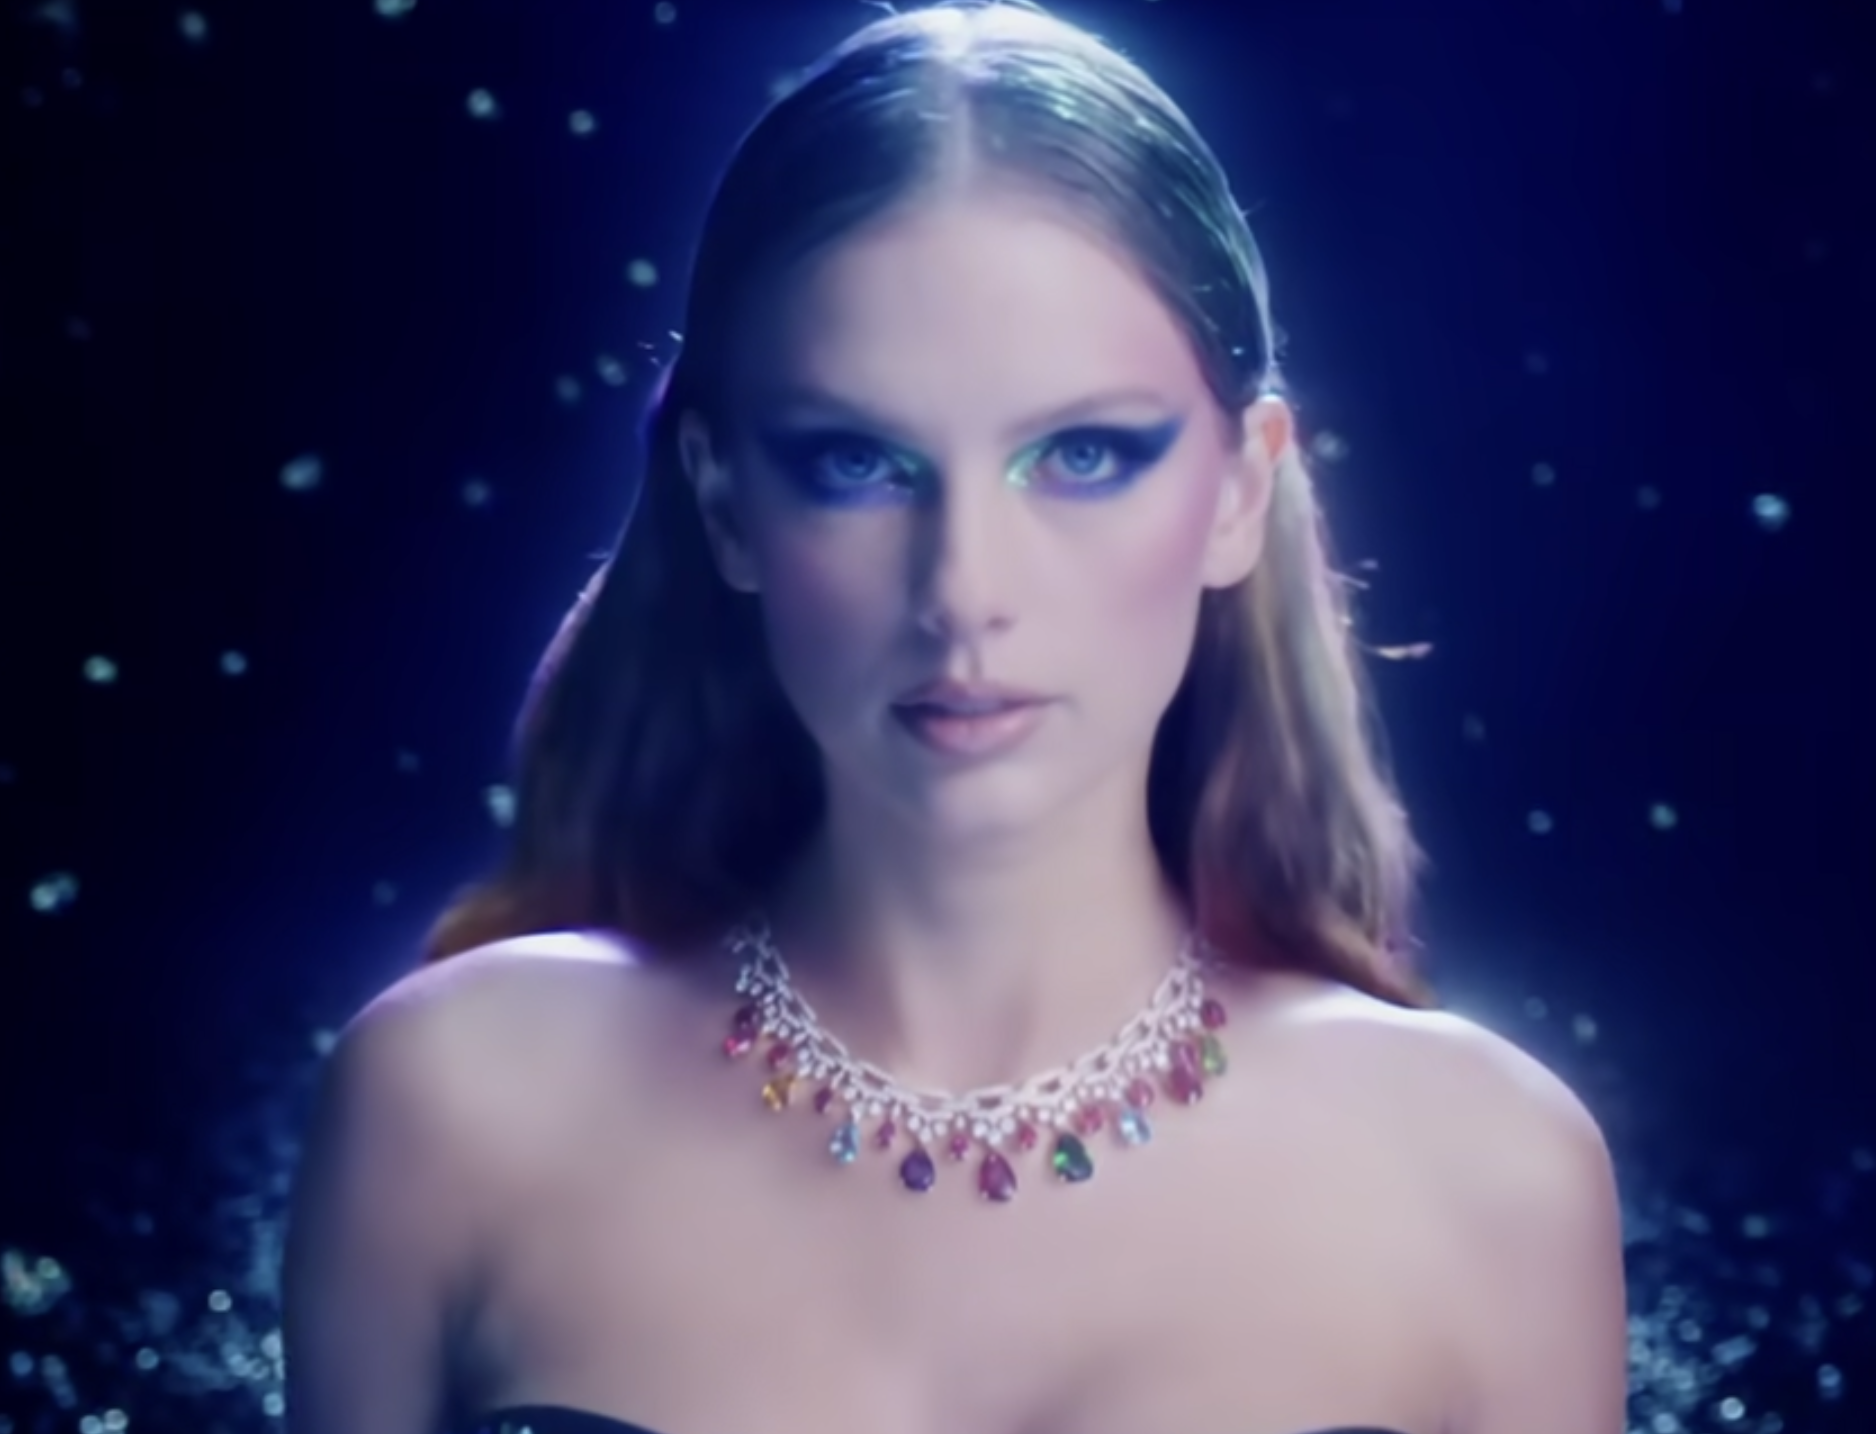 Lirik Lagu Bejeweled – Taylor Swift, Serta Makna Dibaliknya